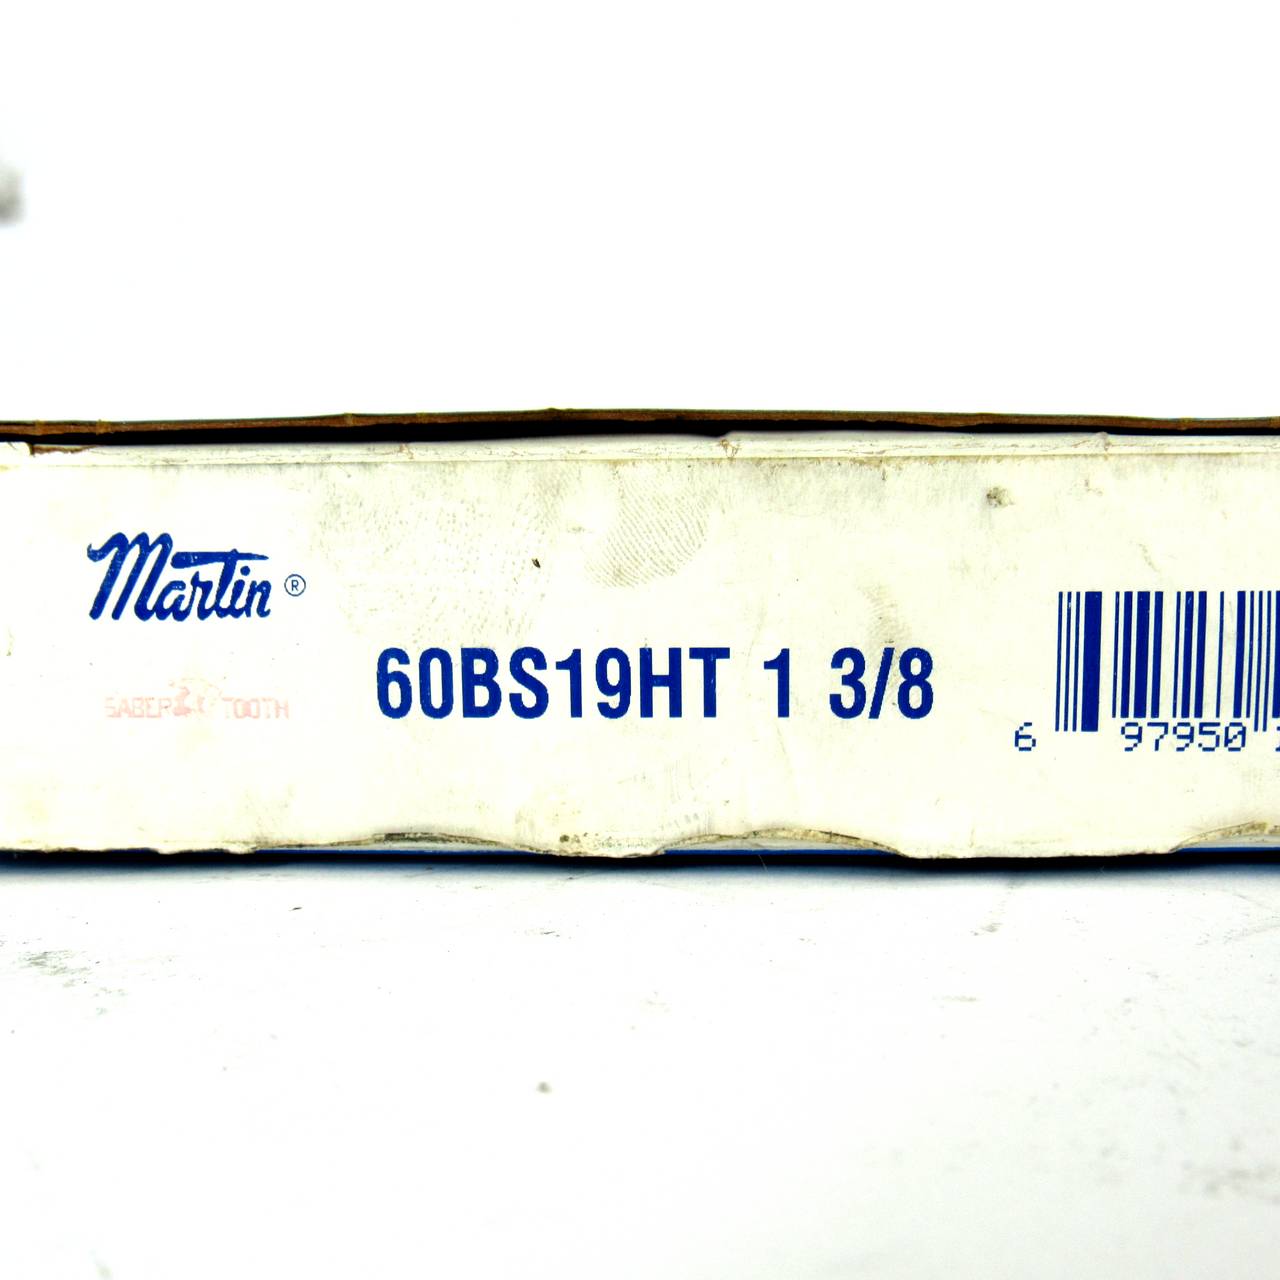 Martin 60BS19HT 1 3/8 Sprocket, 1.3750" Bore